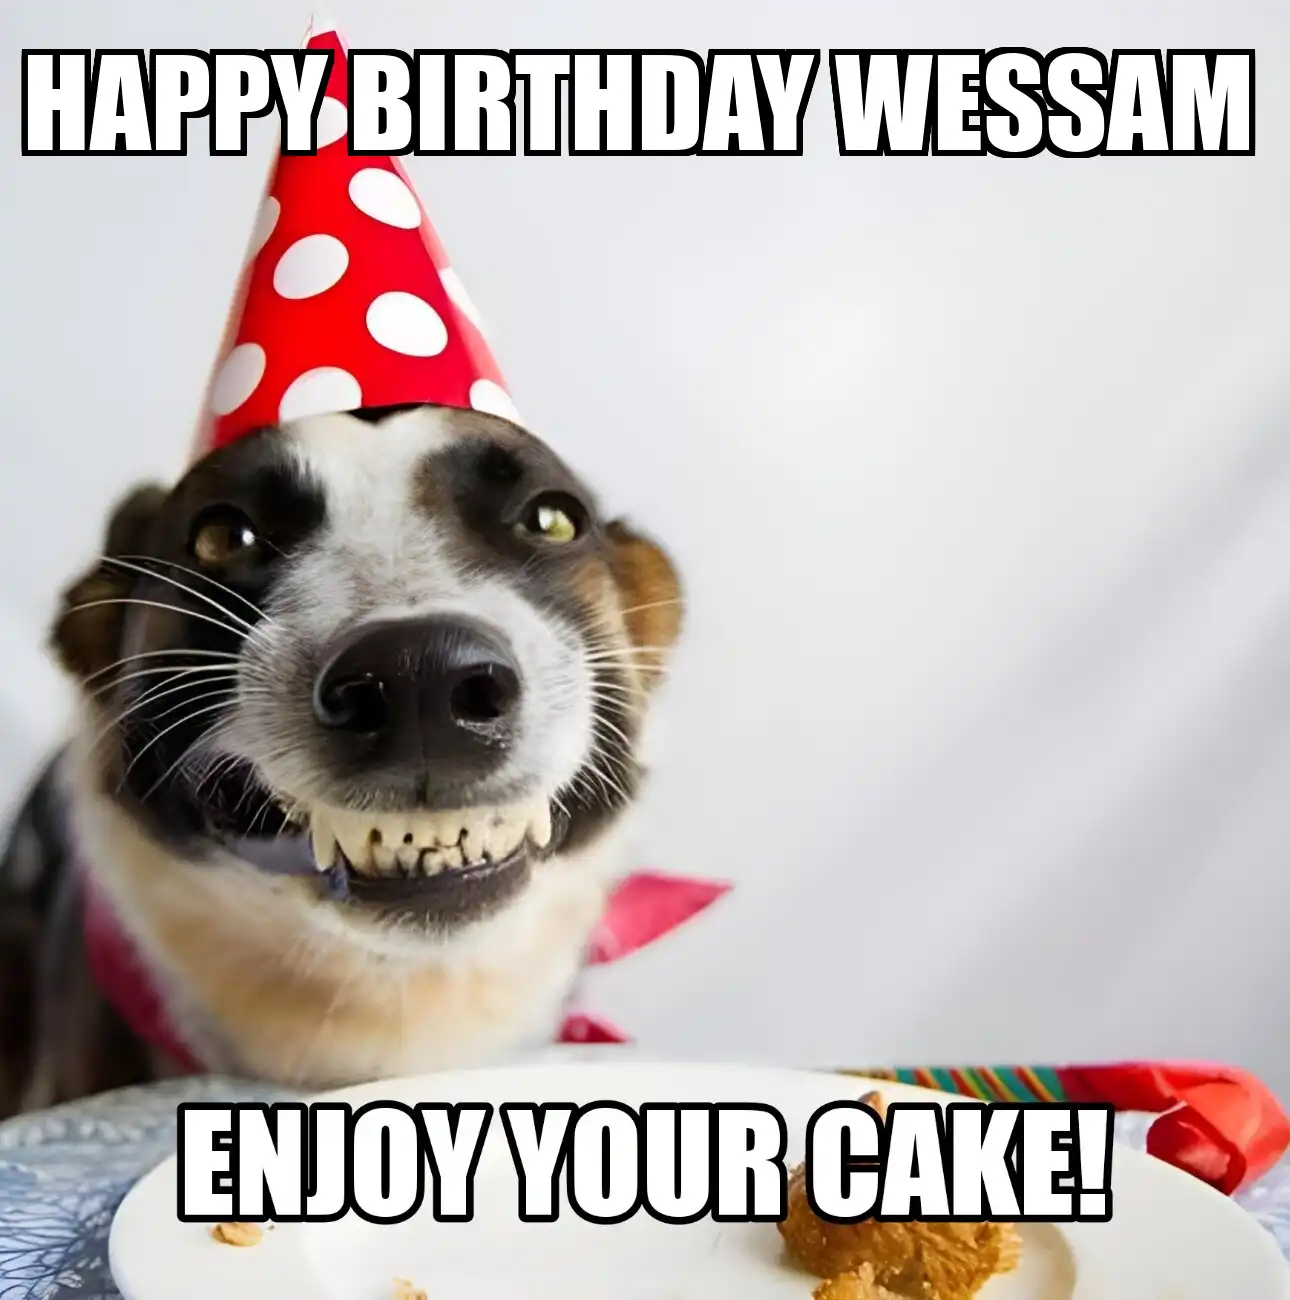 Happy Birthday Wessam Enjoy Your Cake Dog Meme